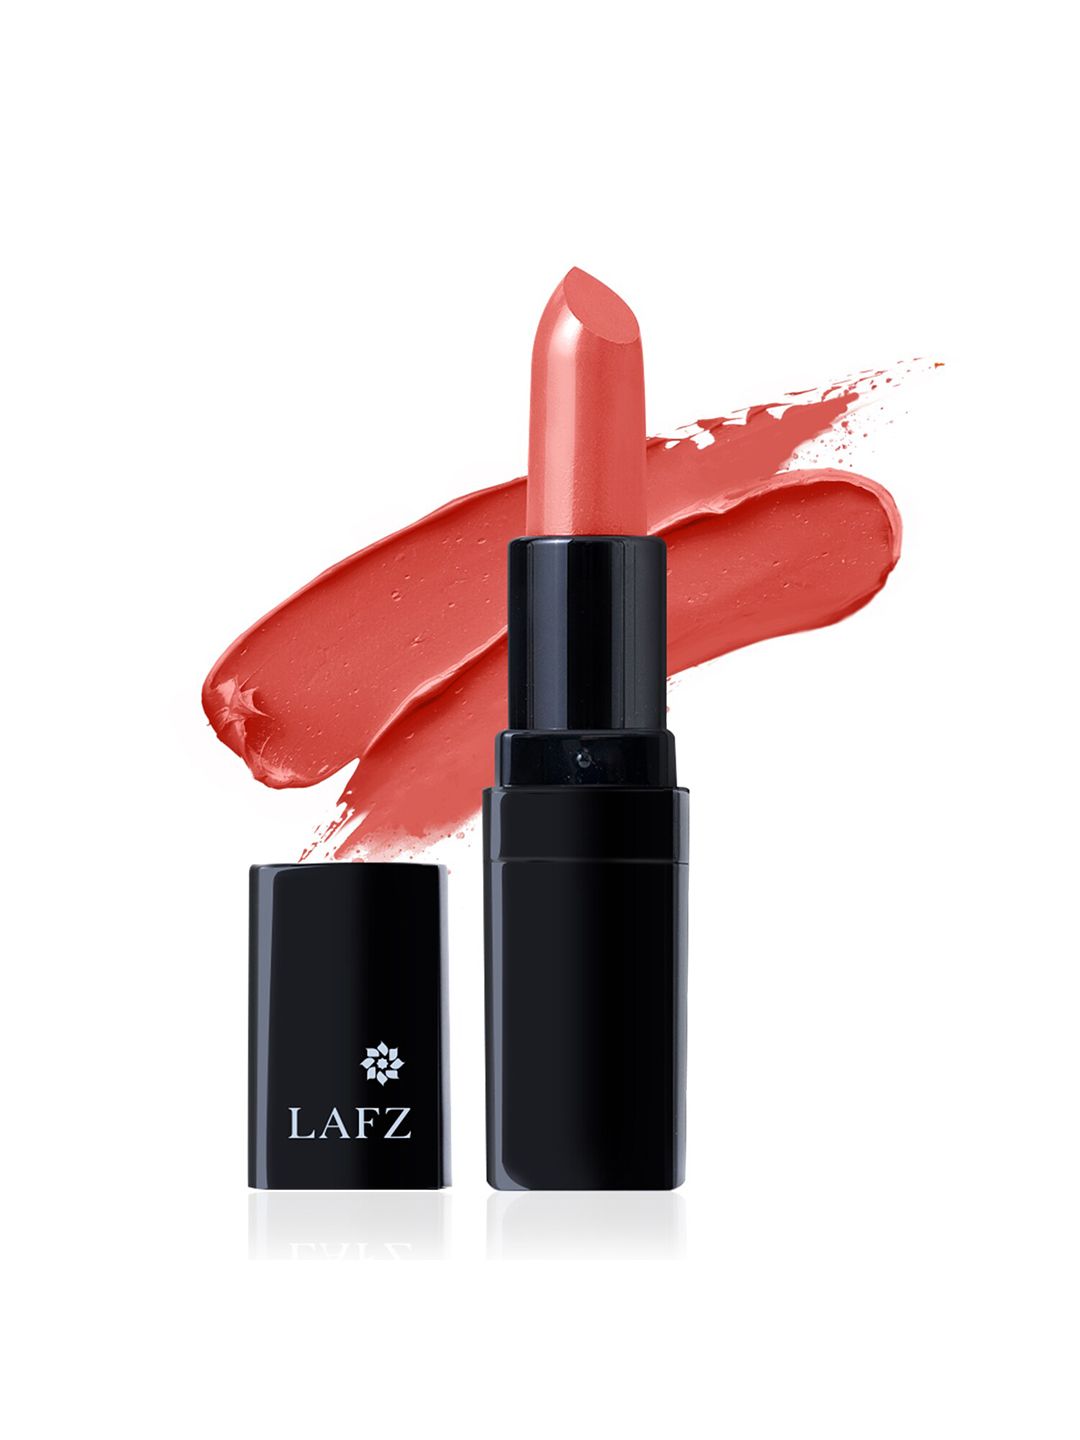 LAFZ Velvet Matte Bullet Lipstick - Parisian Peach 4.5g Price in India